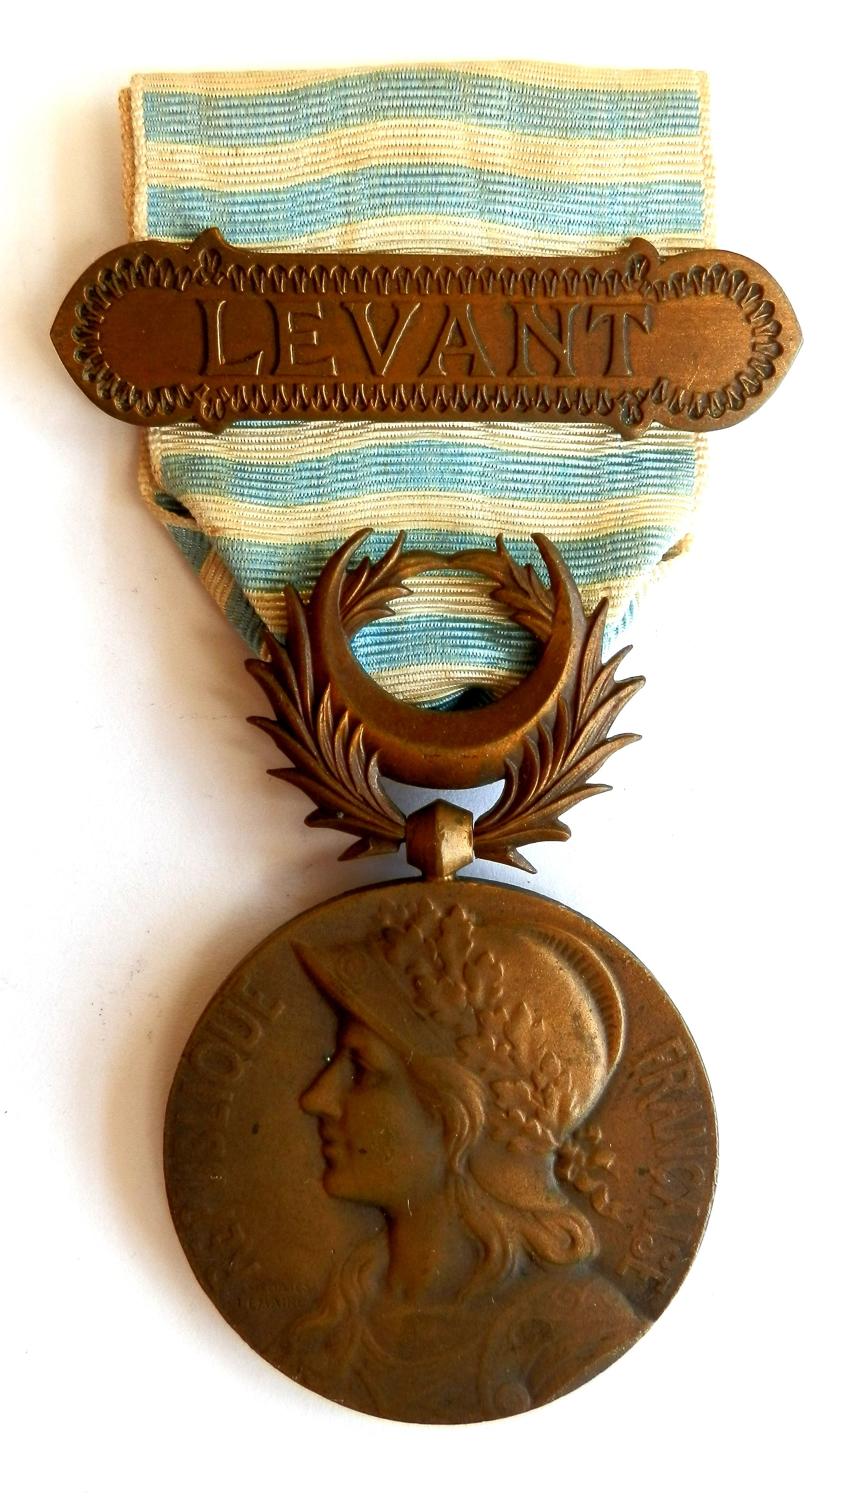 France. Levant Medal 1922. Third Republic era. Clasp Levant.